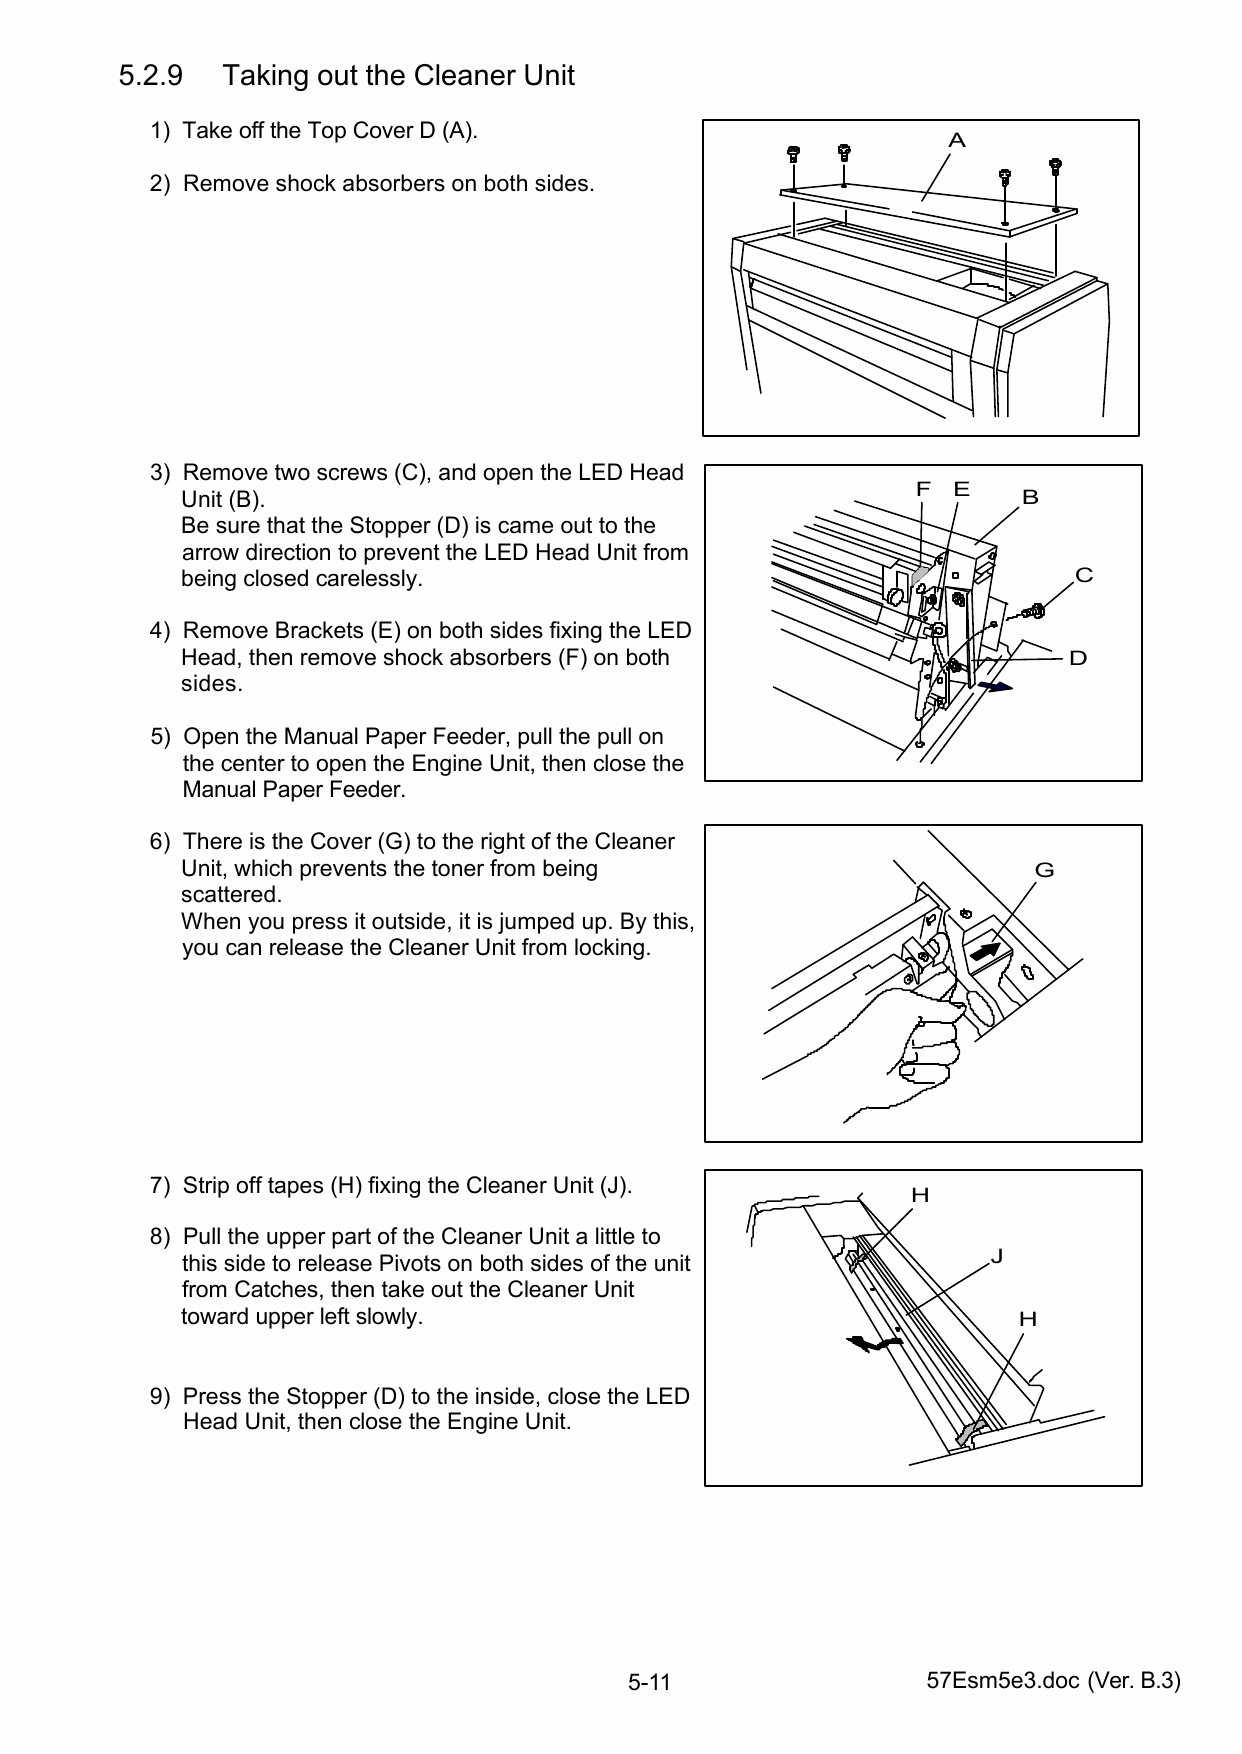 KIP 2720E K-57 Parts and Service Manual-5